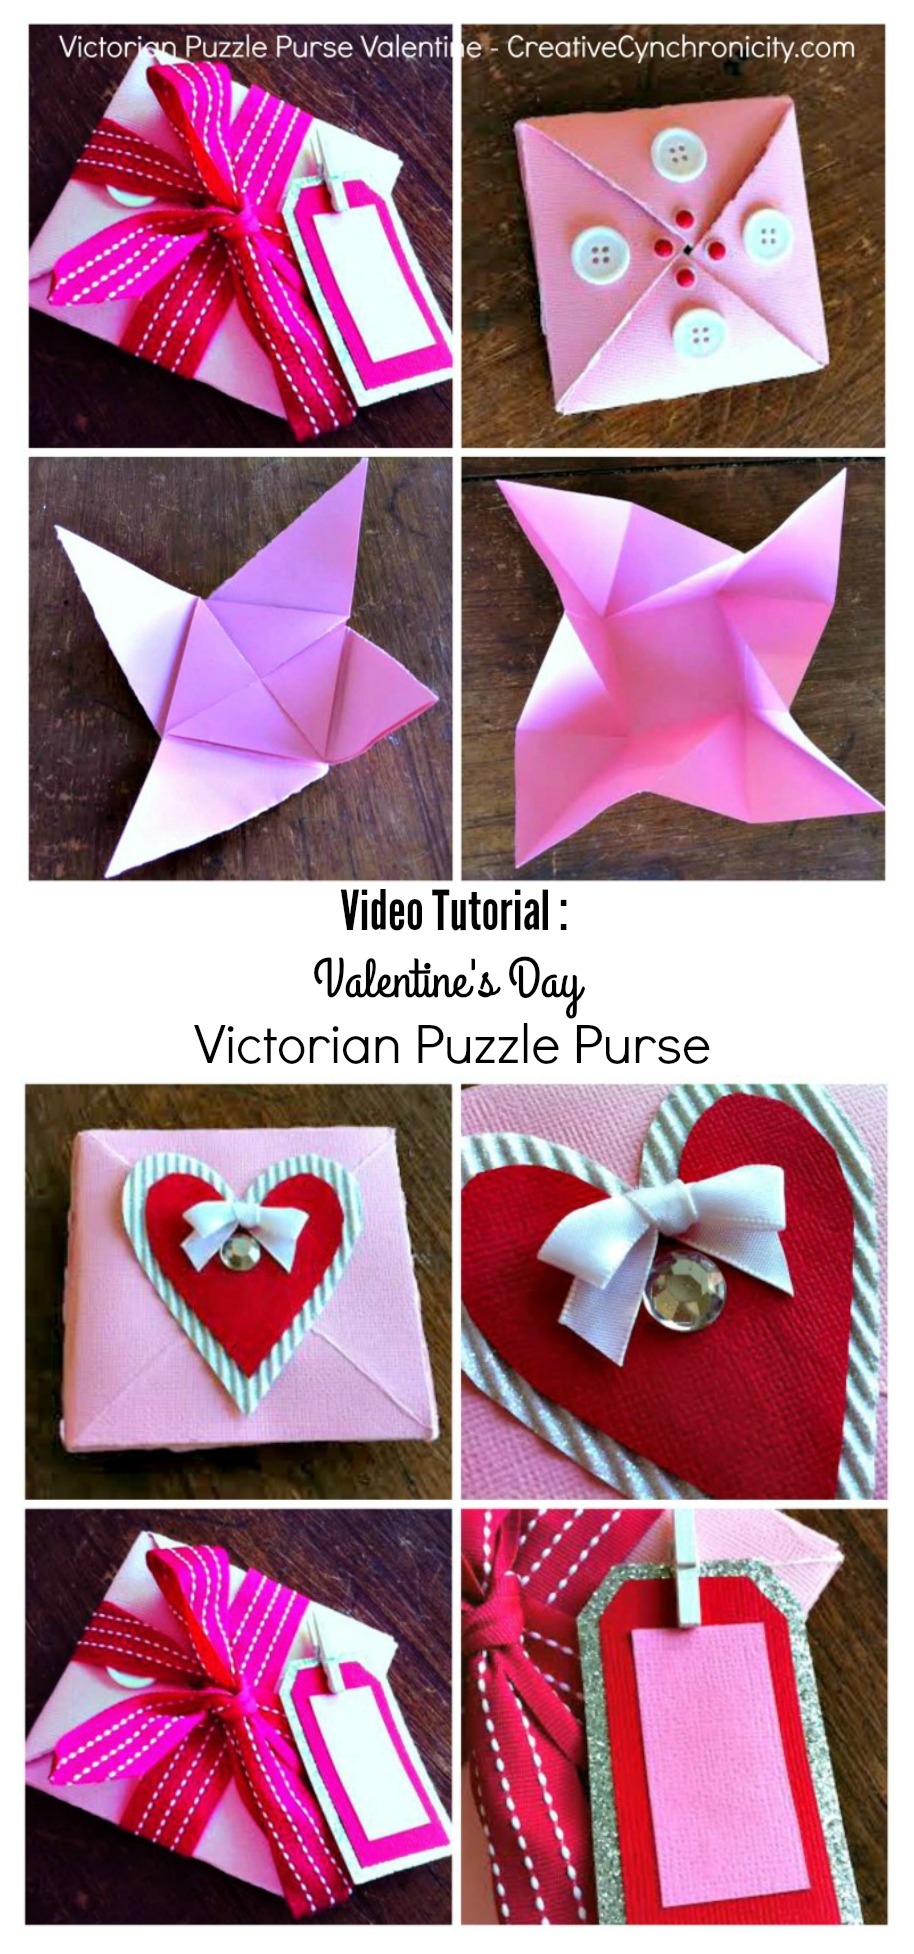 Valentine's Day Victorian Puzzle Purse